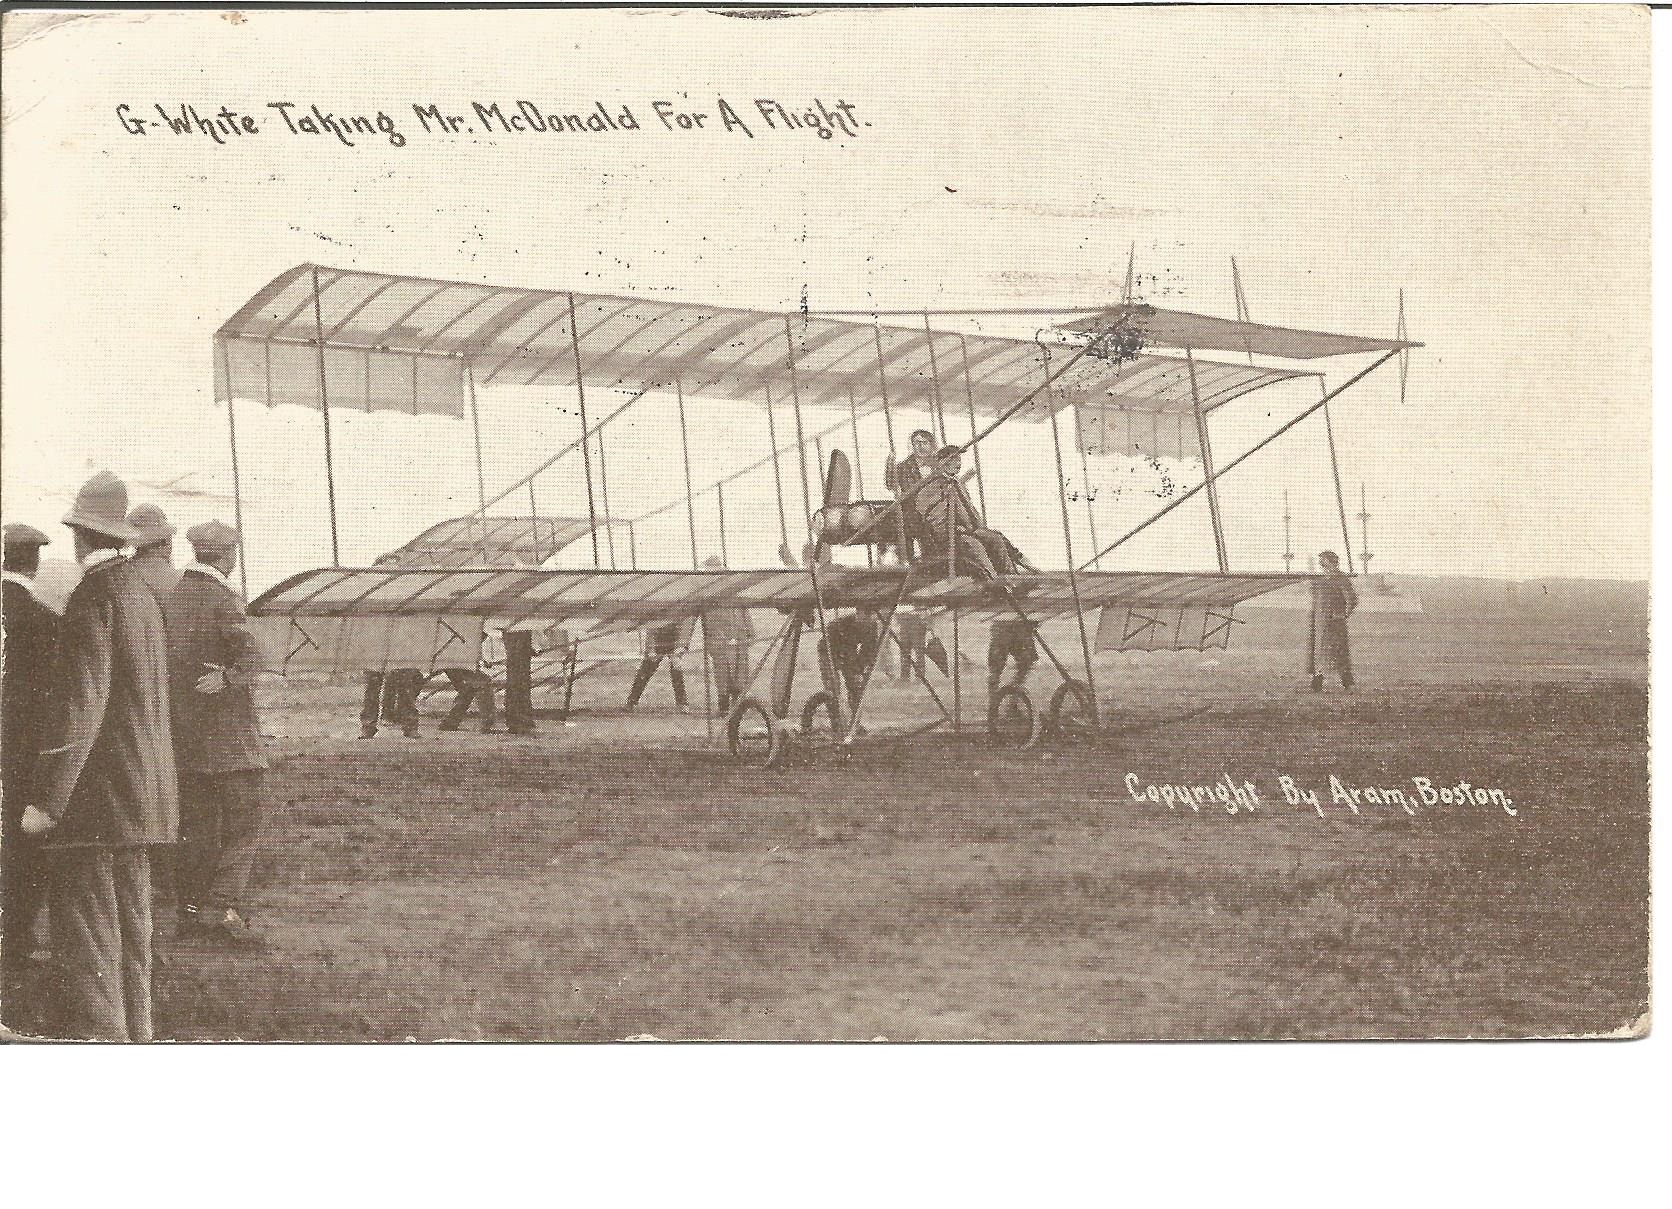 1910 G White taking Mr MacDonald for a flight vintage postcard, Historical interest in senders - Image 2 of 2